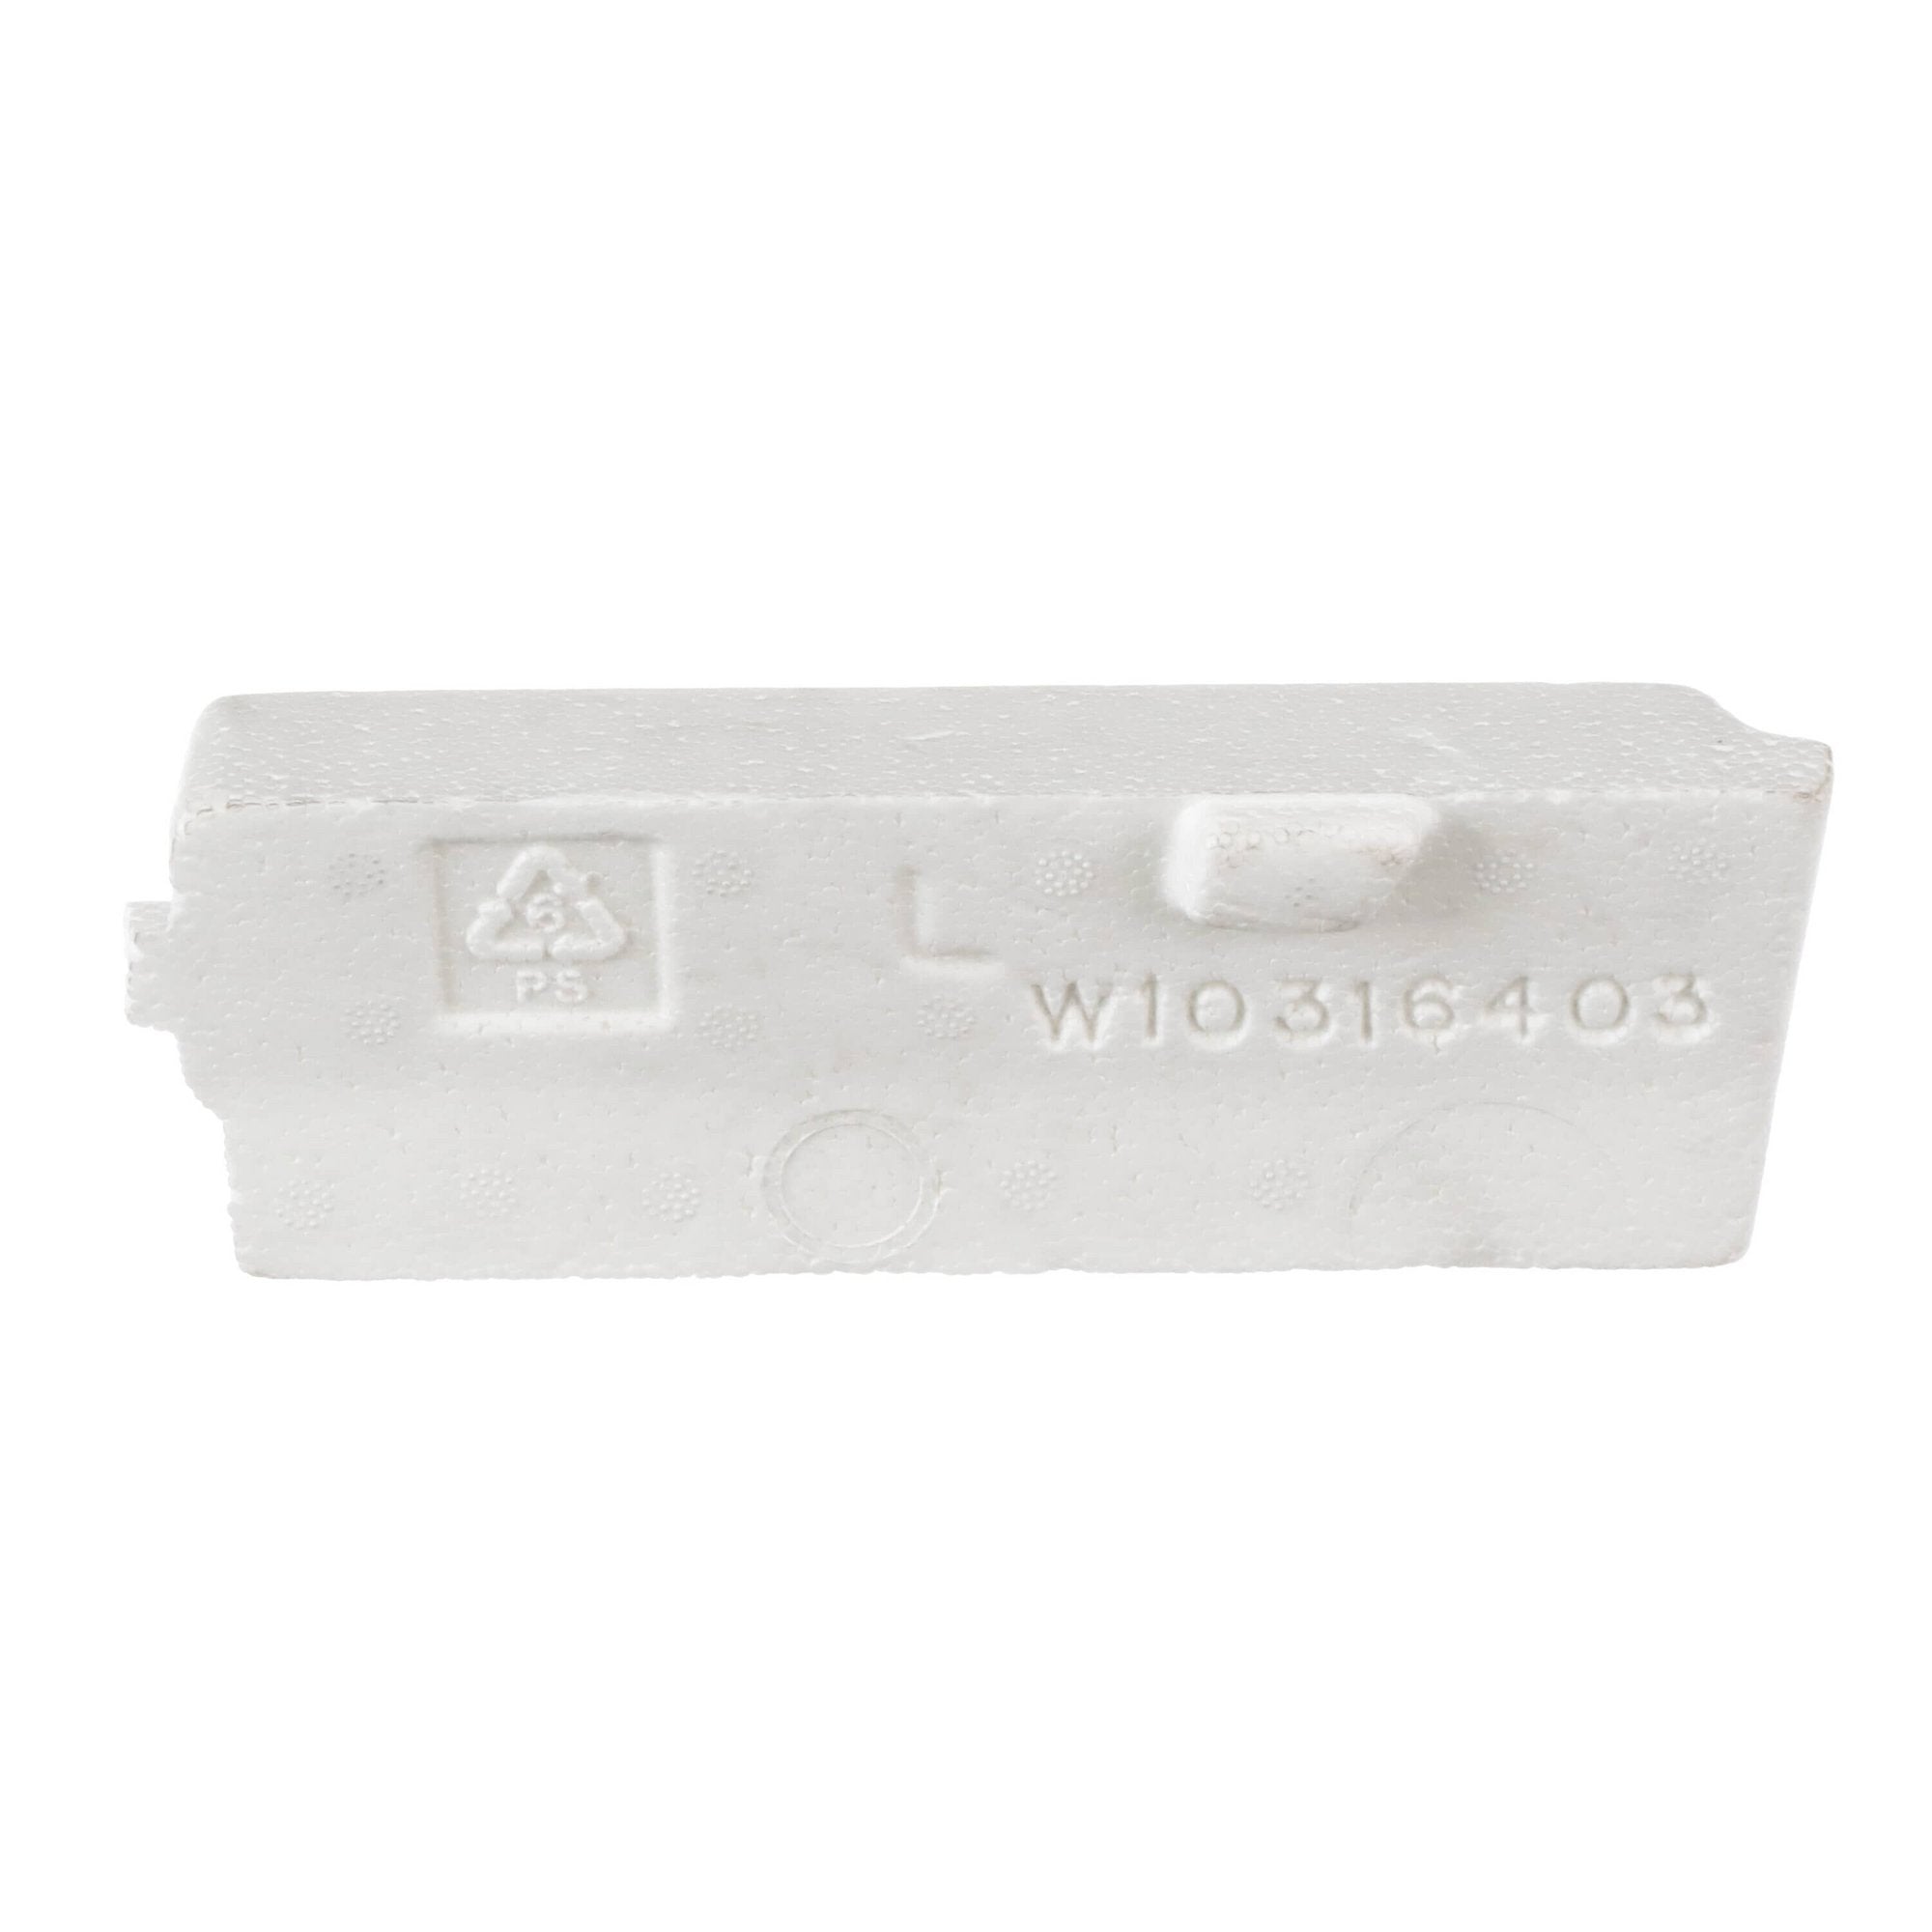 W10316403 - Whirlpool Refrigerator Terminal Block New